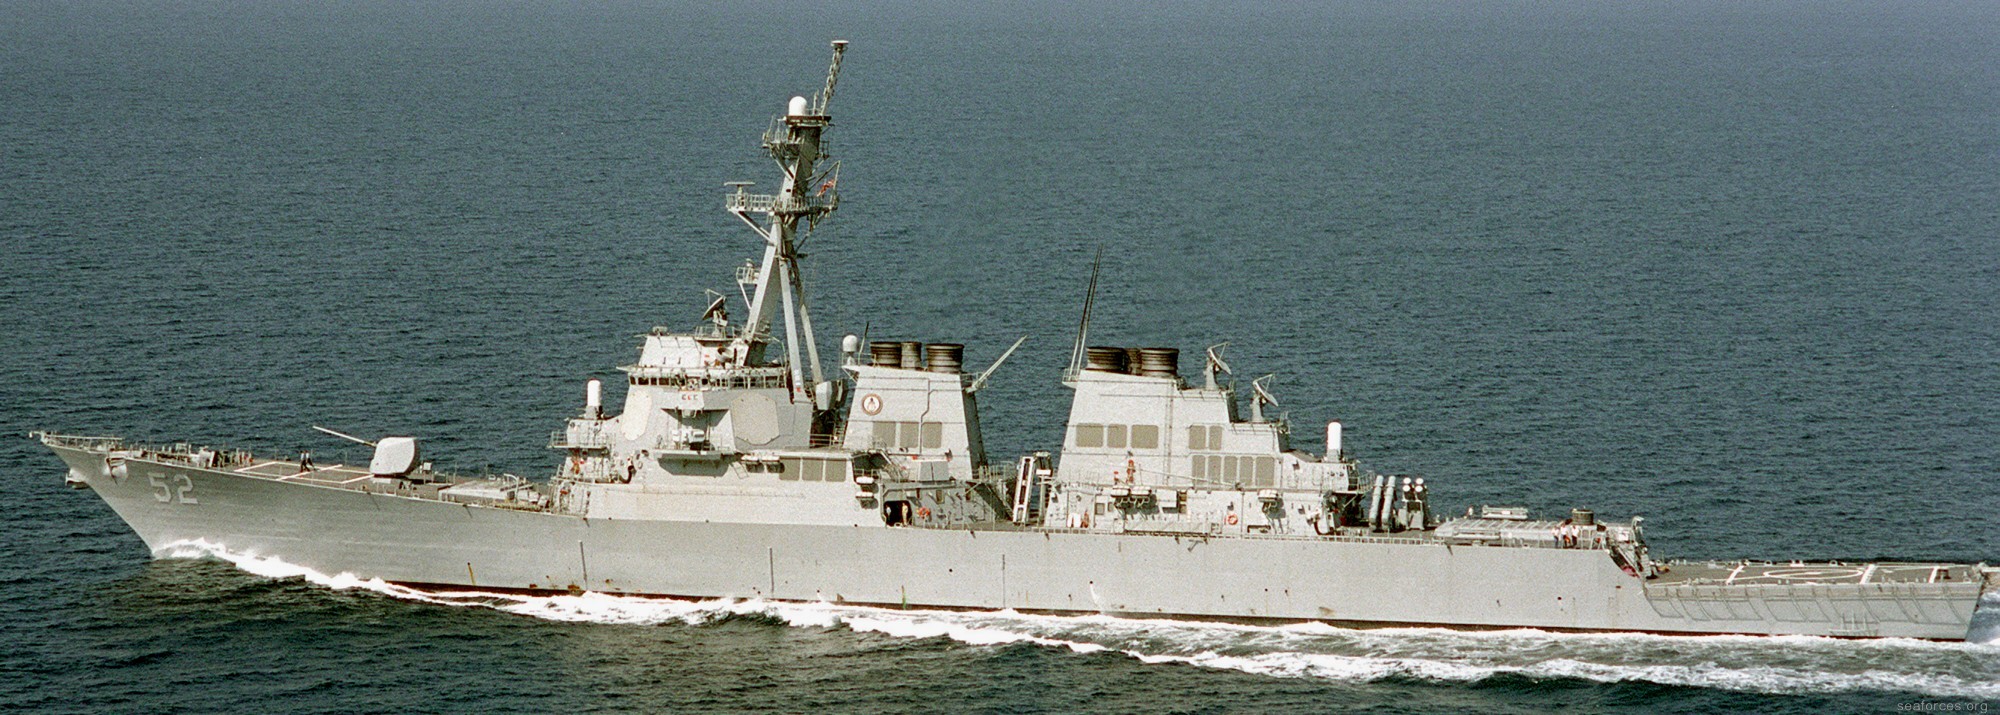 ddg-52 uss barry guided missile destroyer us navy 92